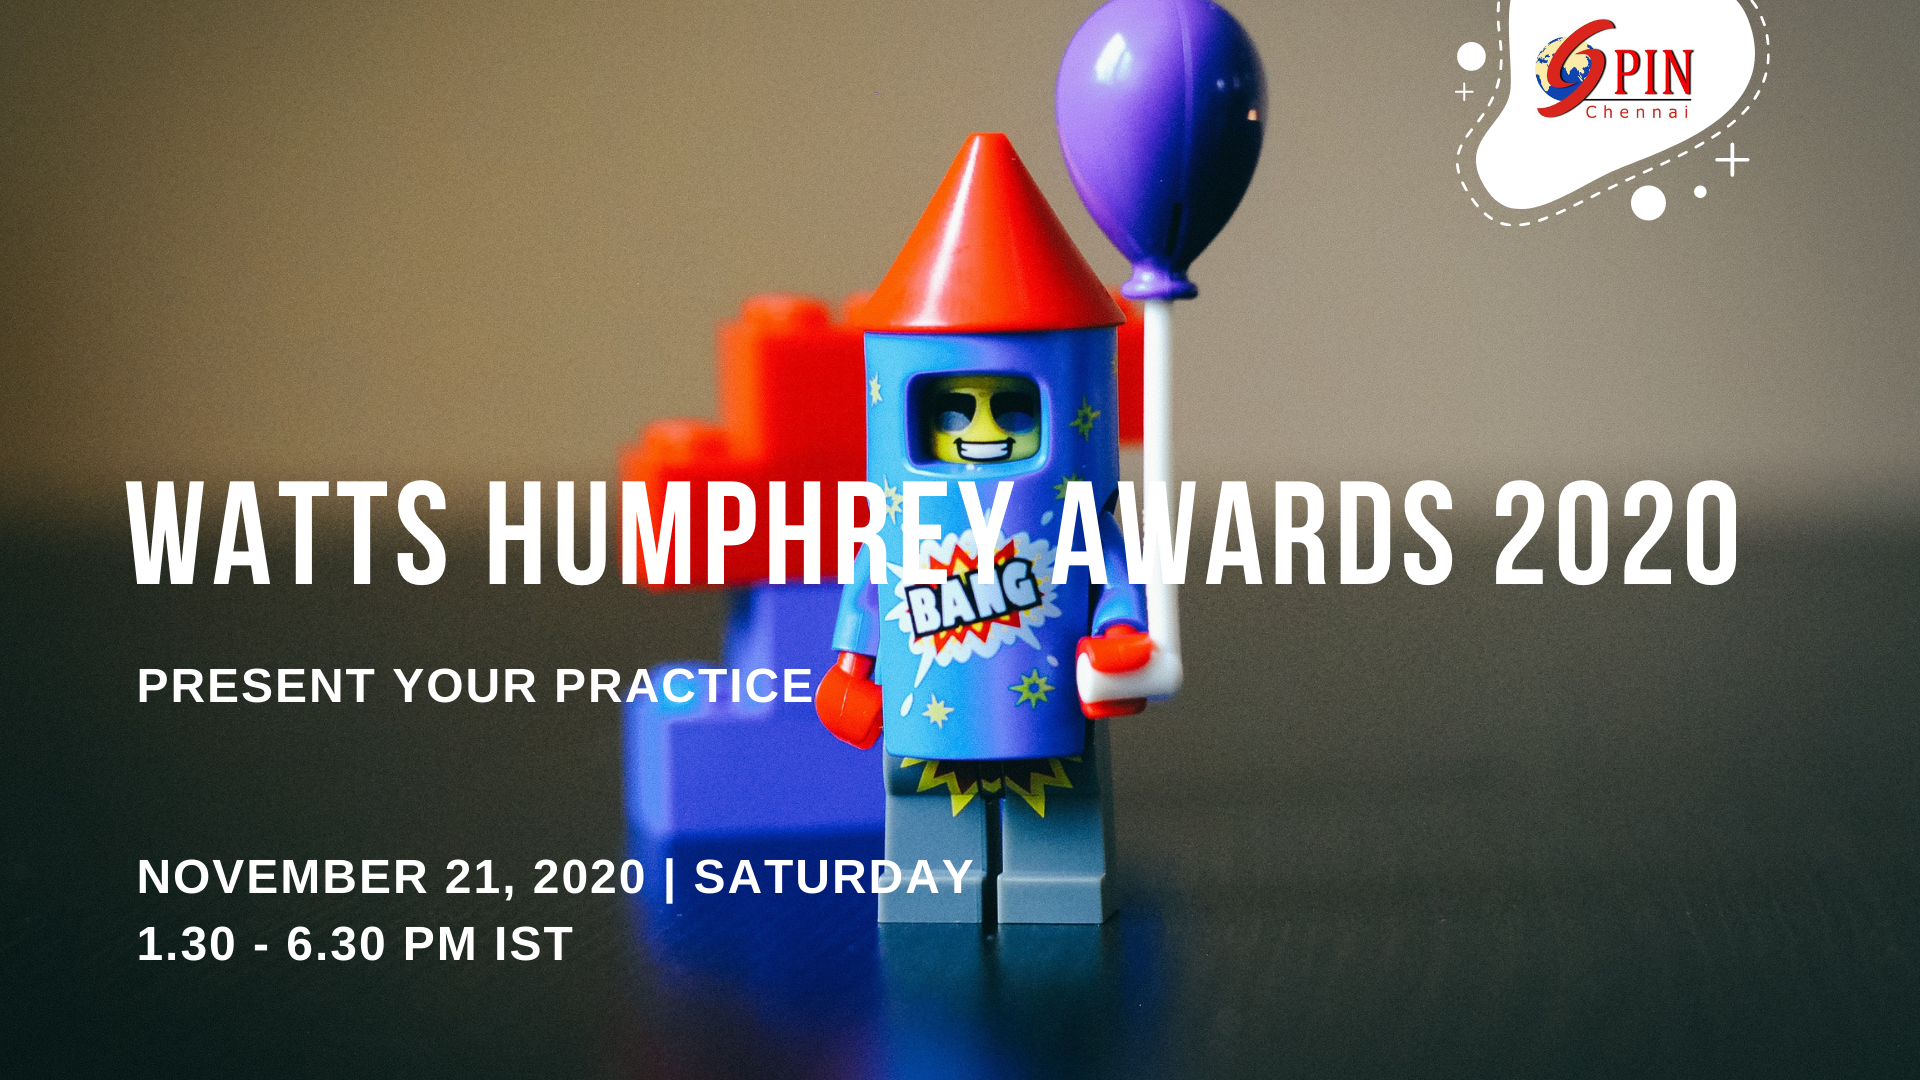 Watts Humphrey Awards 2020